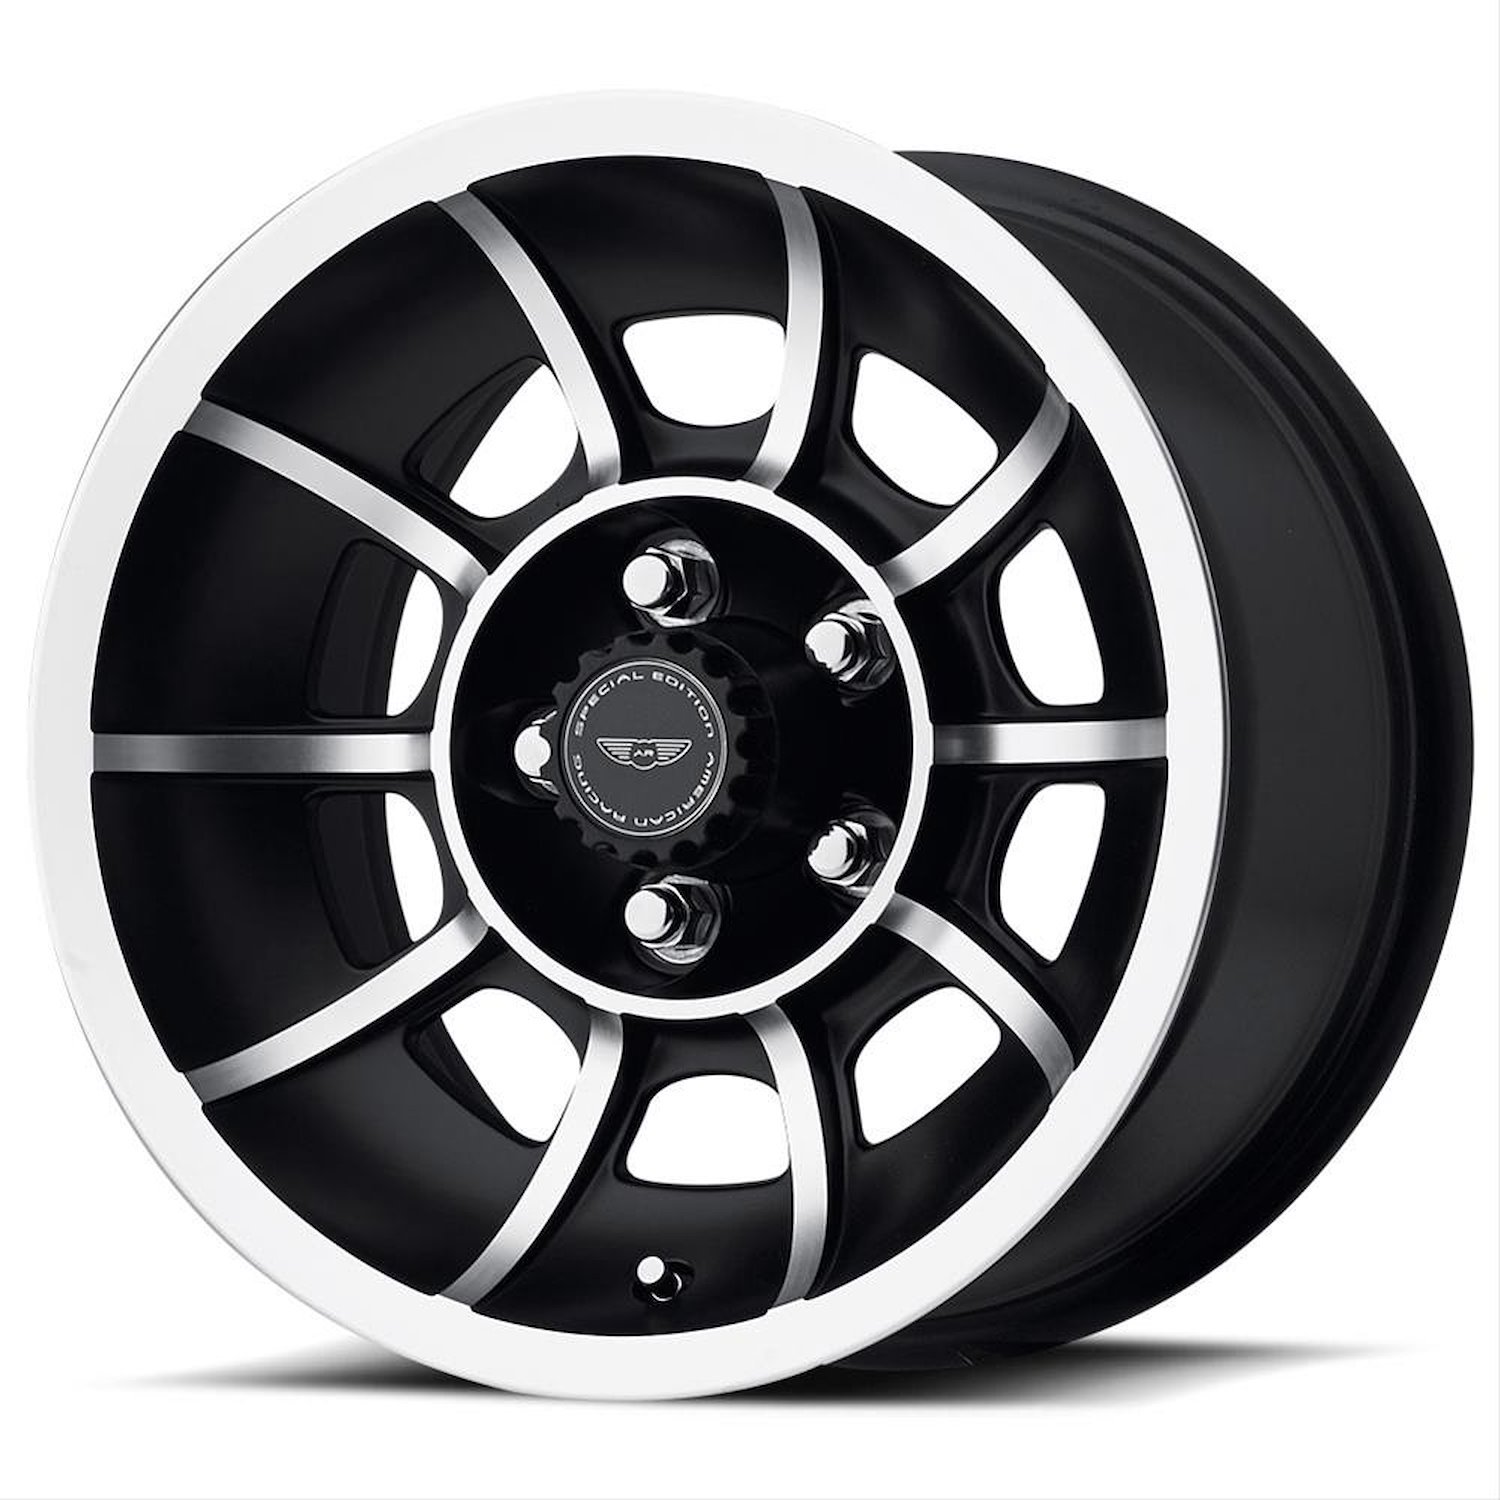 VN47 Series Vector Wheel Size: 15" x 8-1/2"